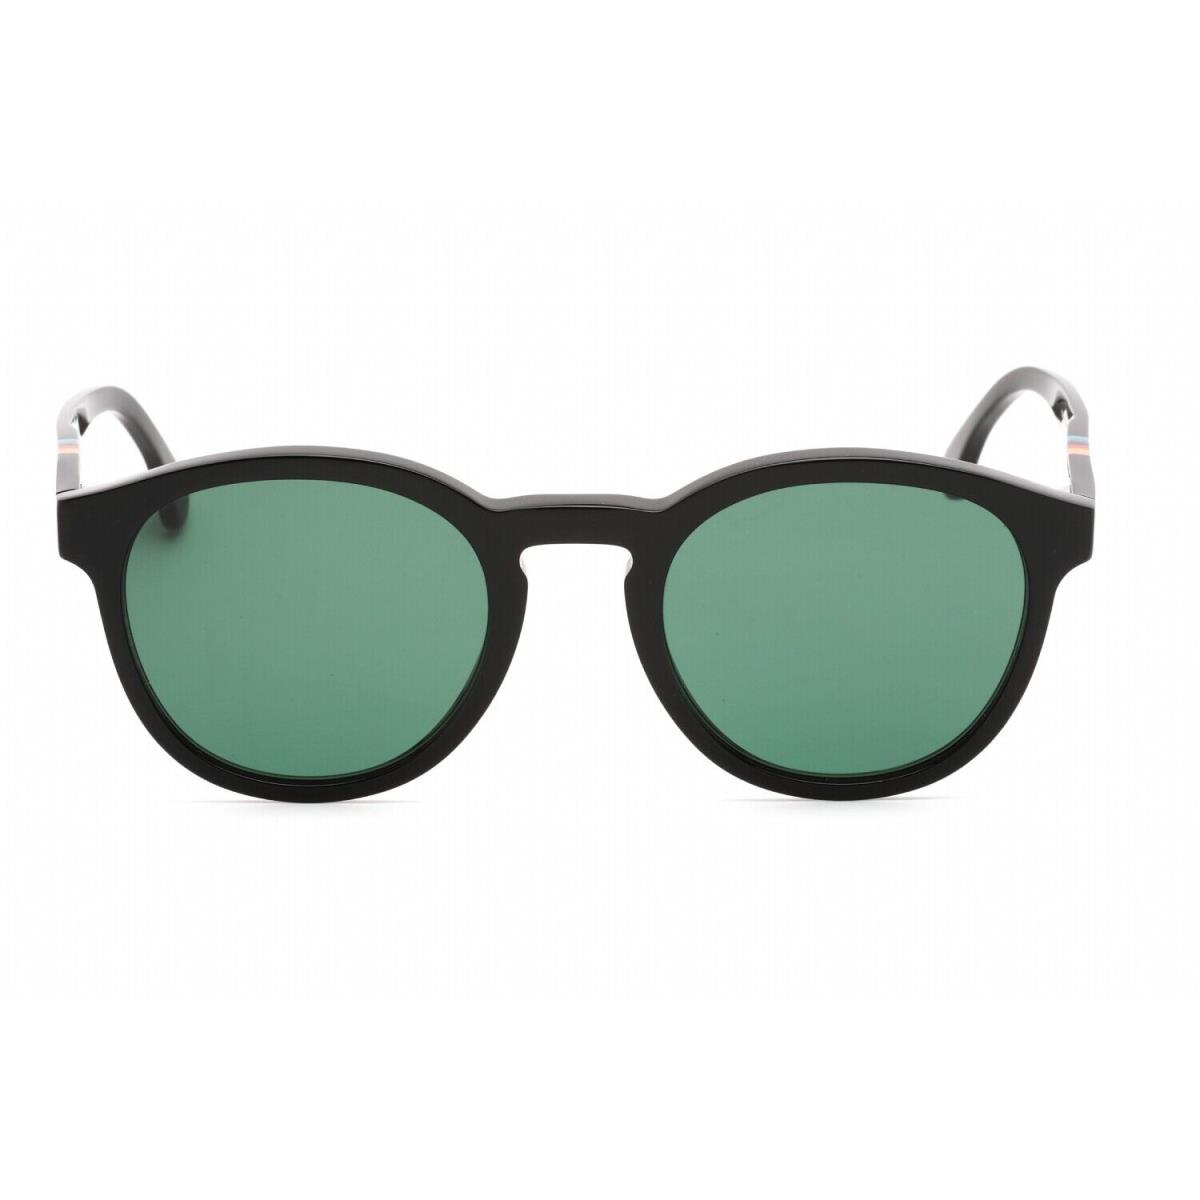 Paul Smith PSSN05652 Deeley 001 Sunglasses Black Frame Green Lenses 52mm